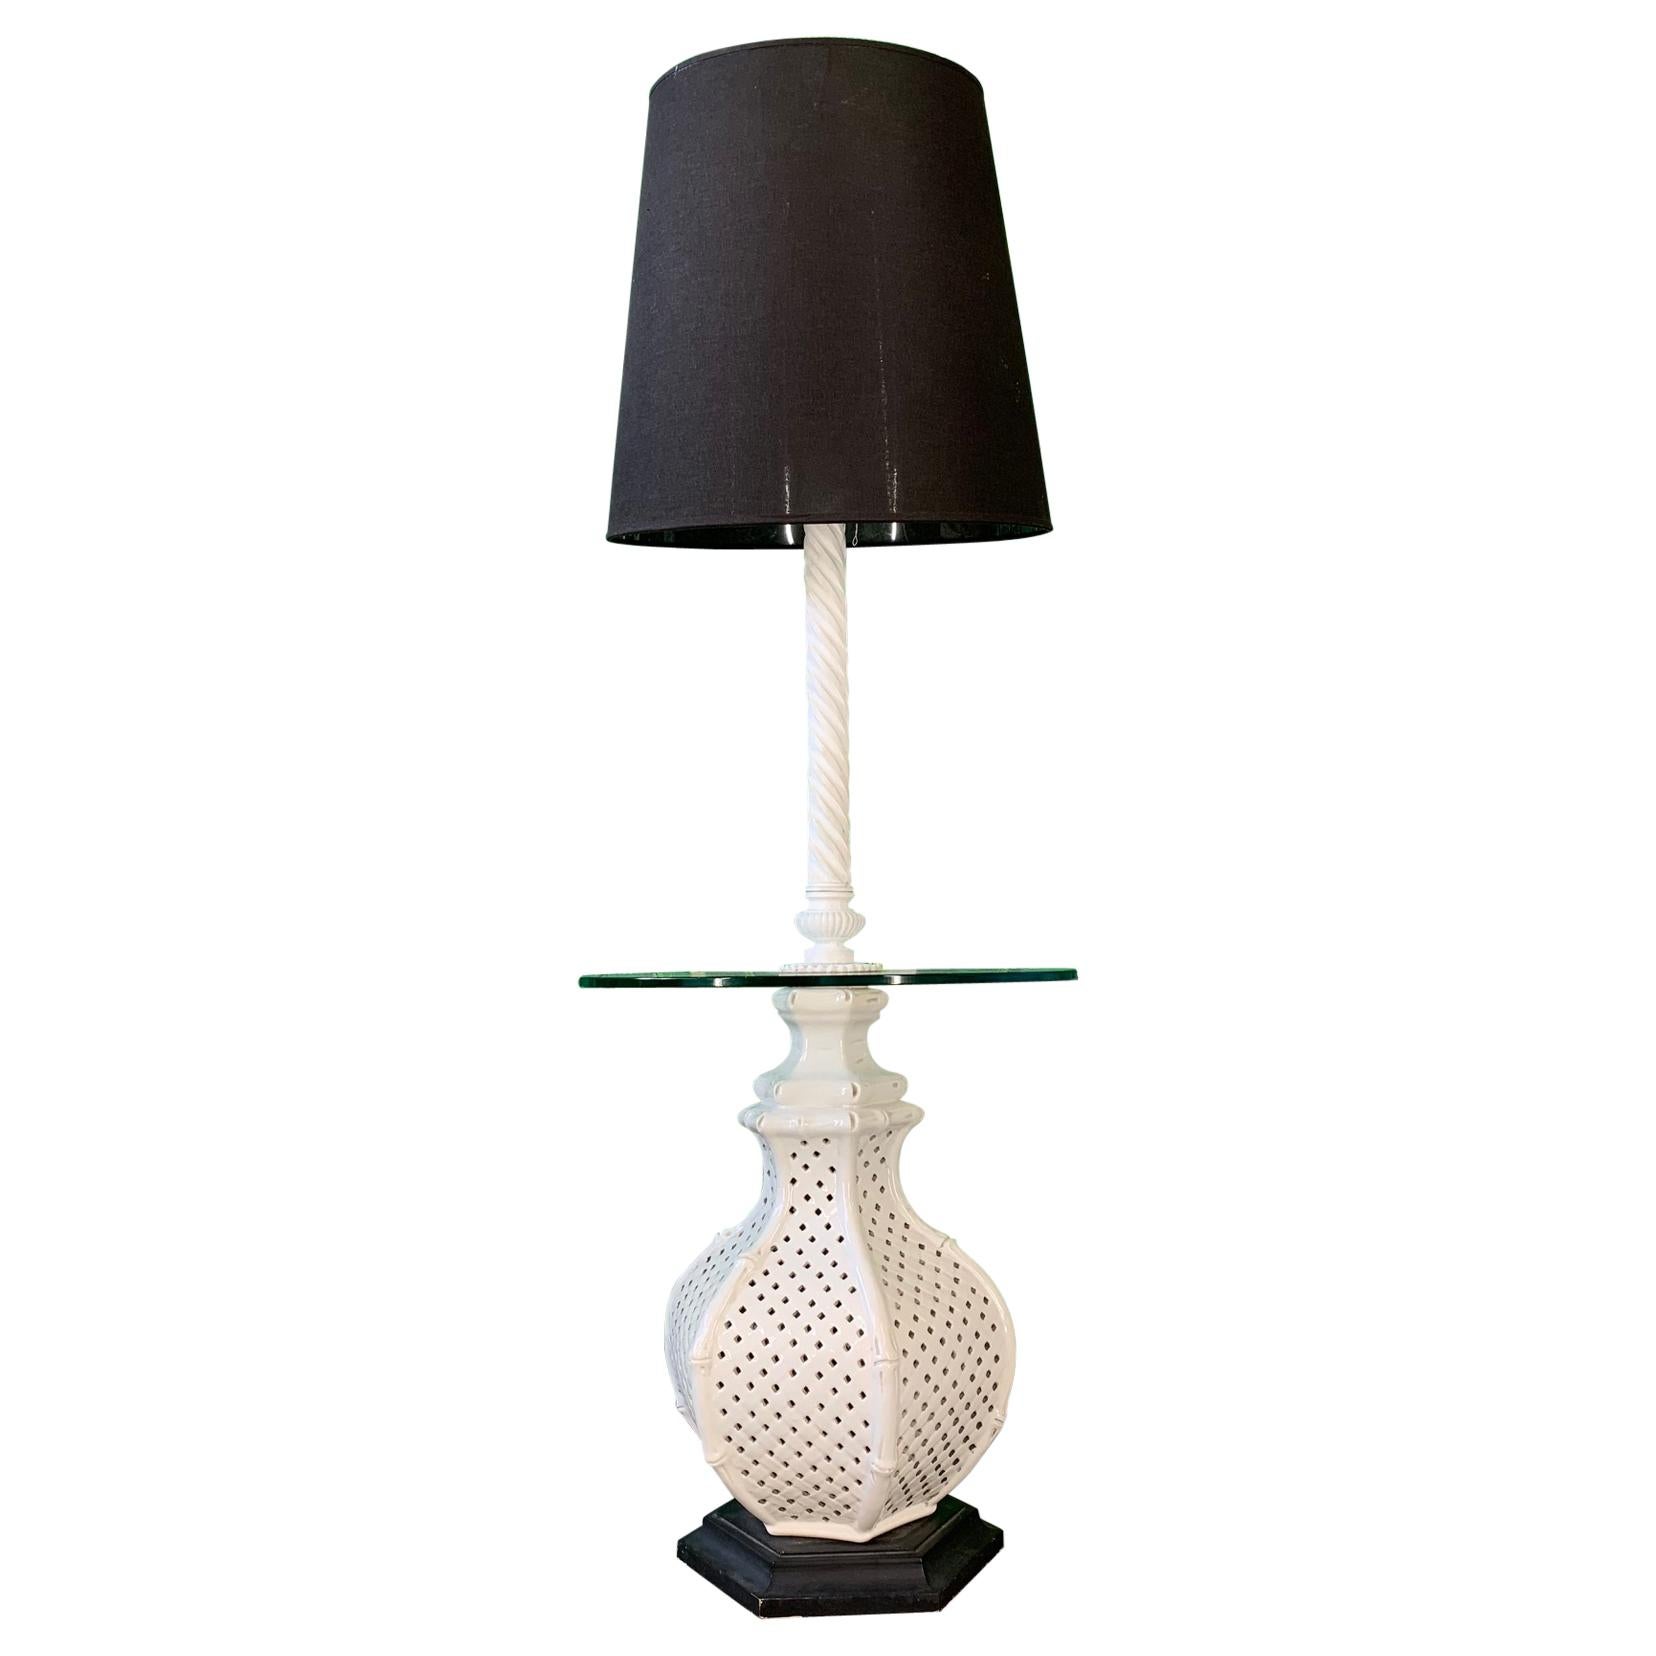 Reticulated Ceramic Floor Lamp Table By, Ceramic Floor Lamp Base